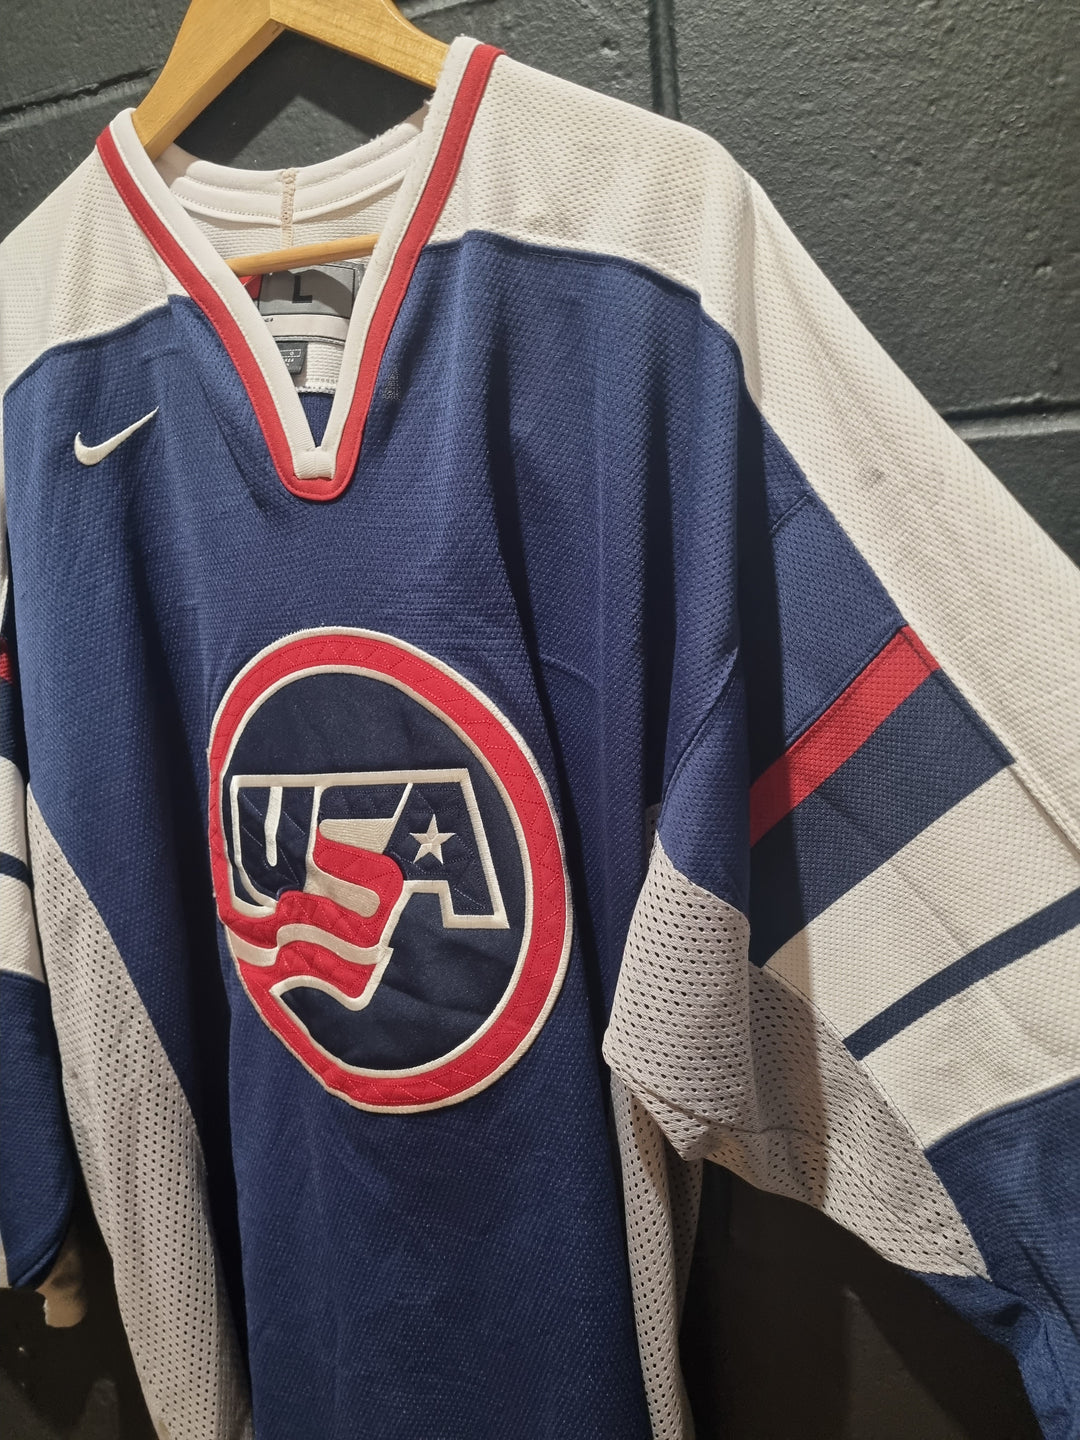 USA Nike Meshed Jersey Large